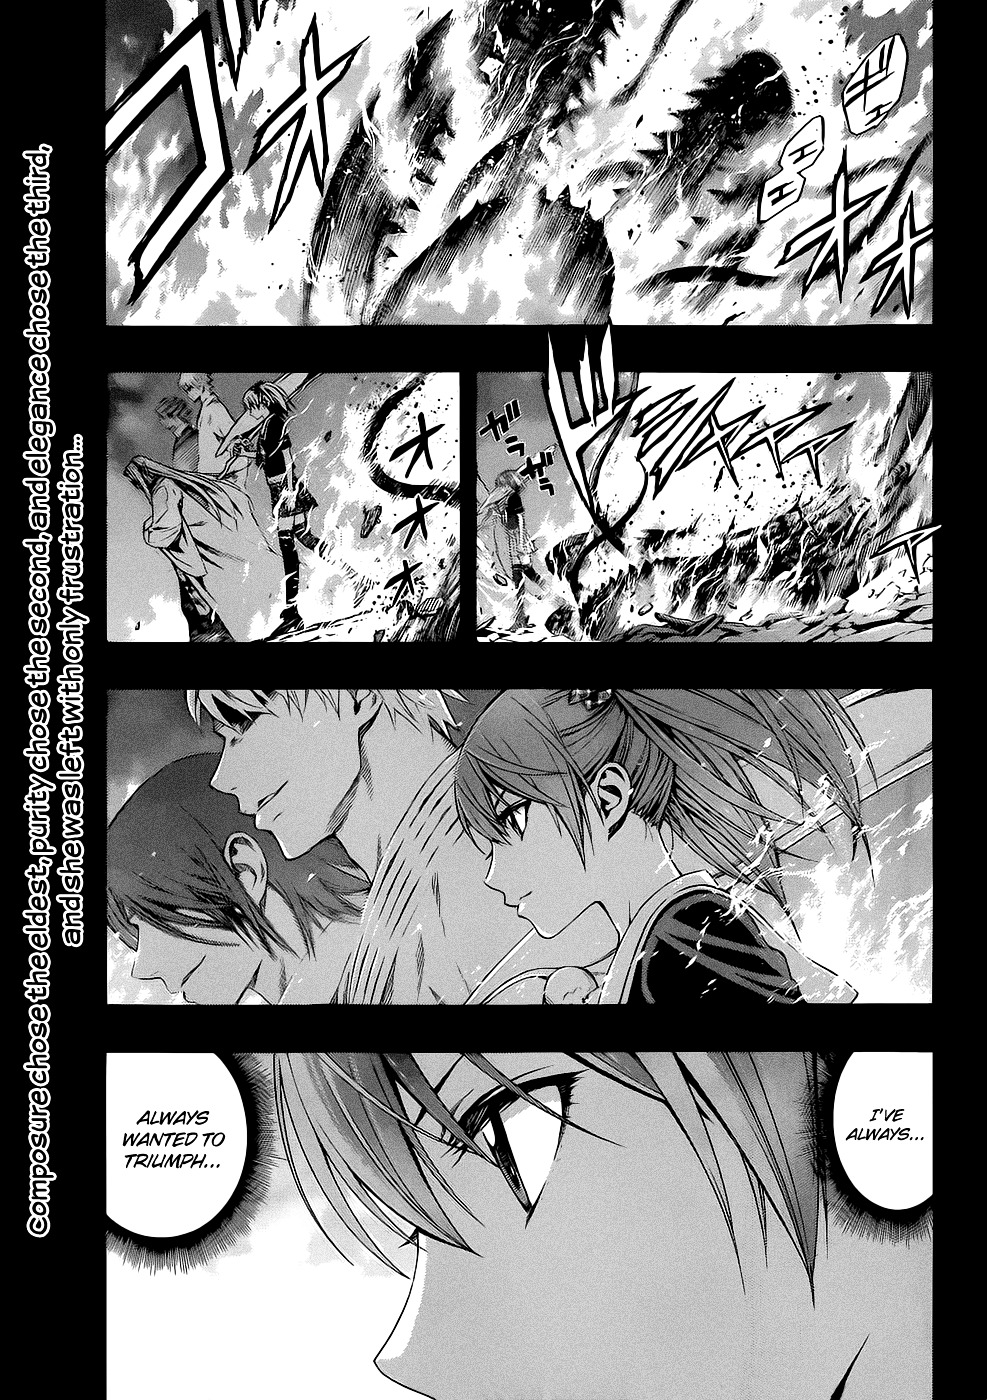 Rosario To Vampire Season Ii - Page 2